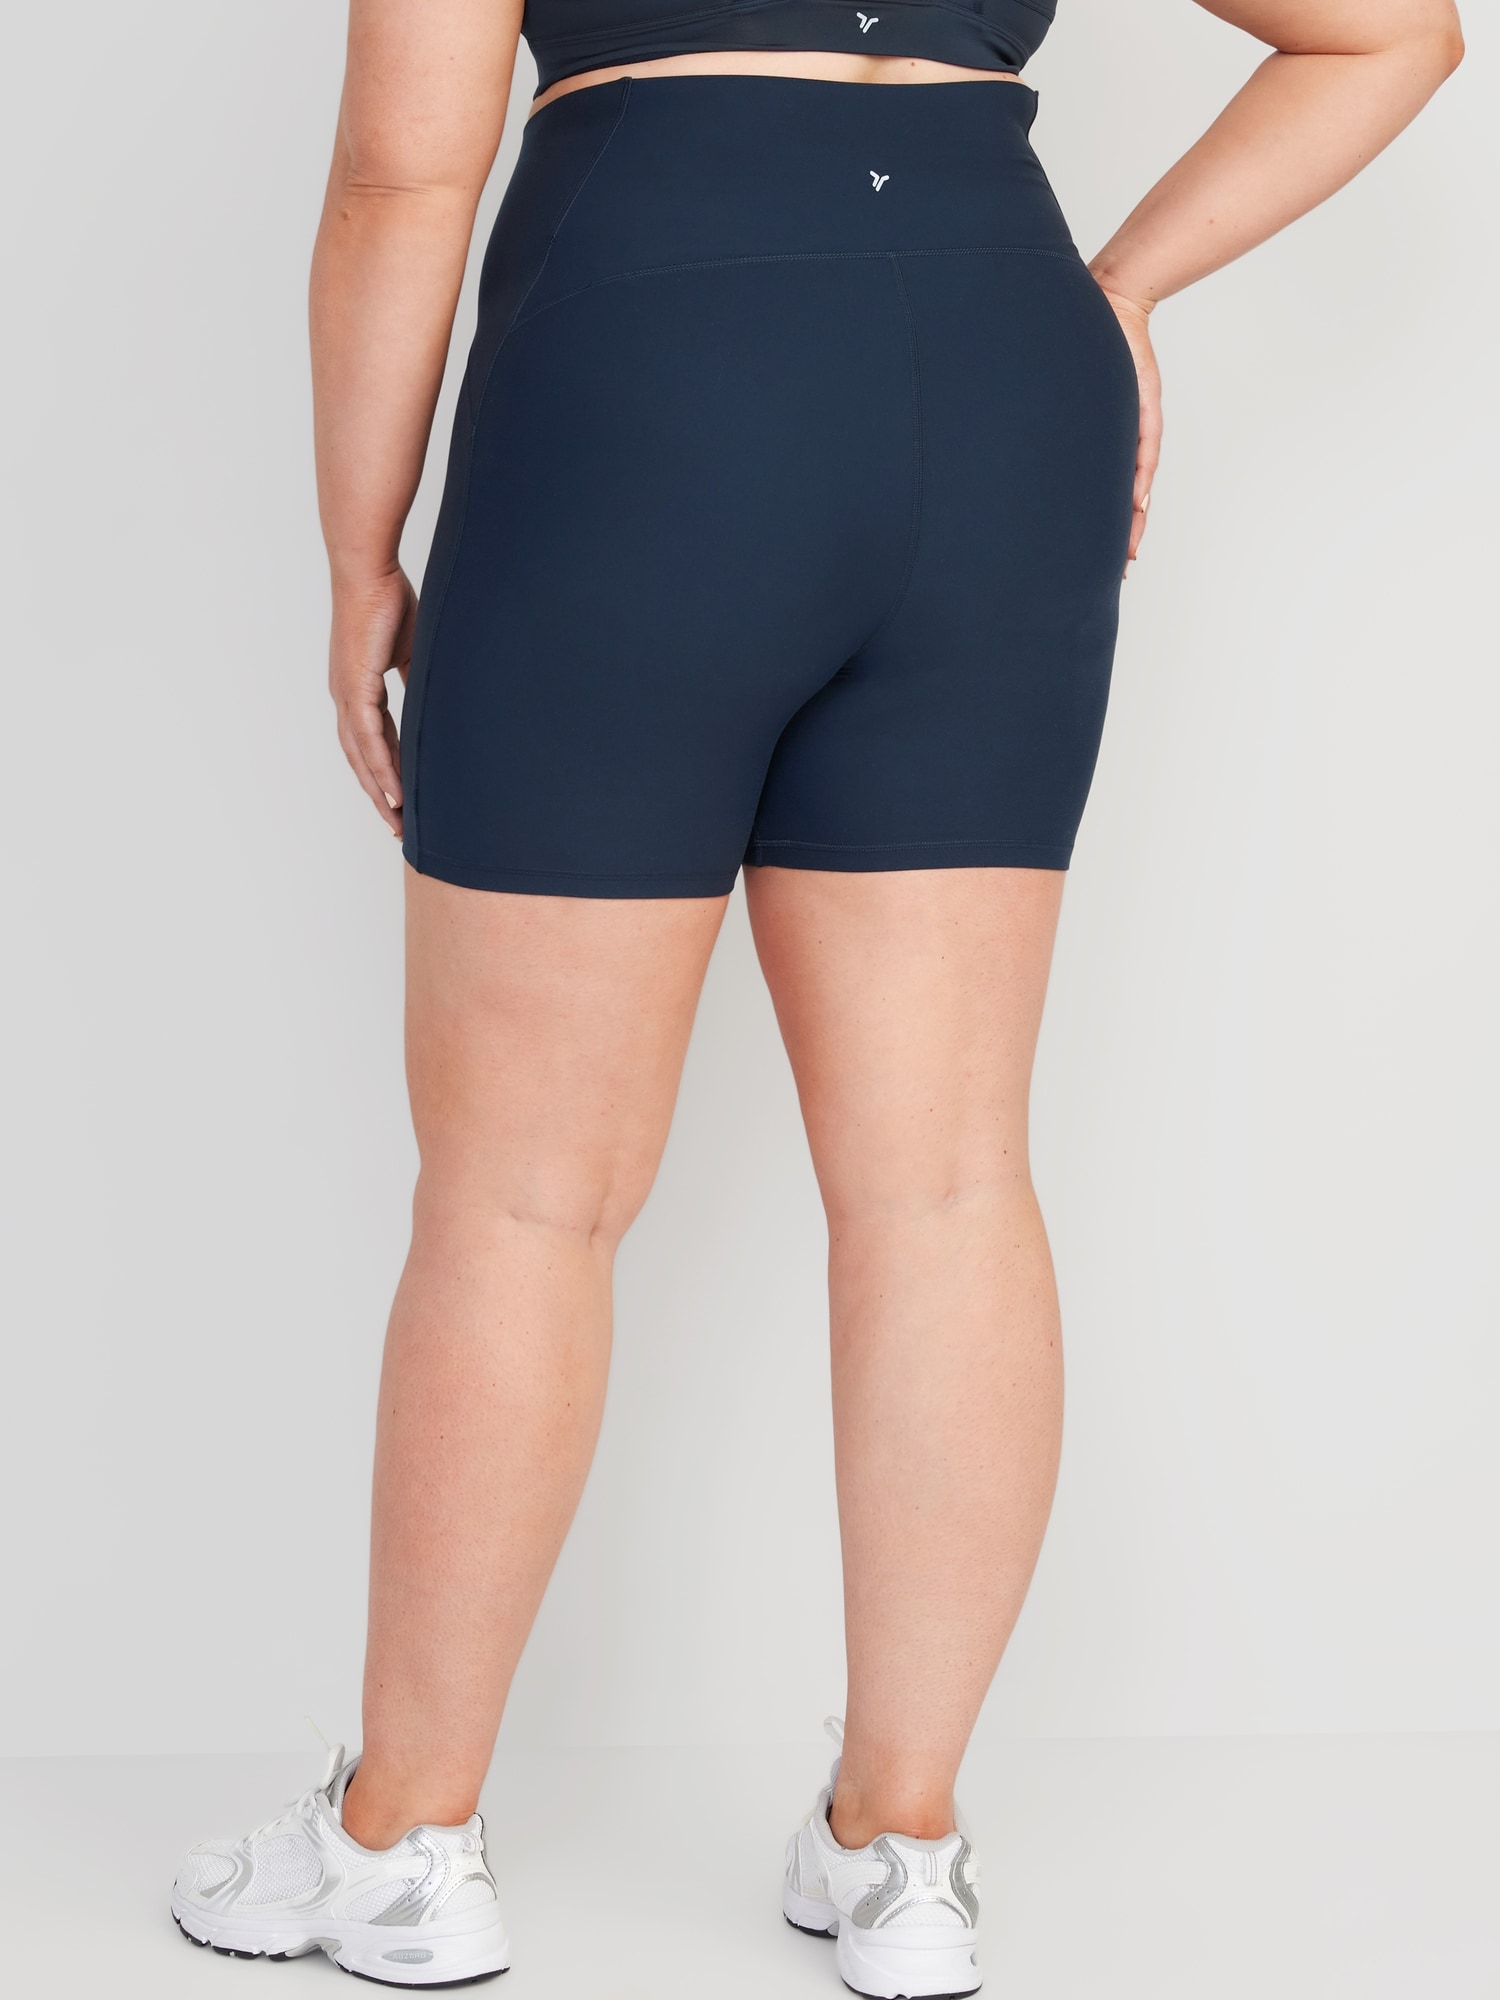 Extra High-Waisted PowerLite Shorts Lycra® Women Biker Navy inseam Old 6-inch | -- for ADAPTIV